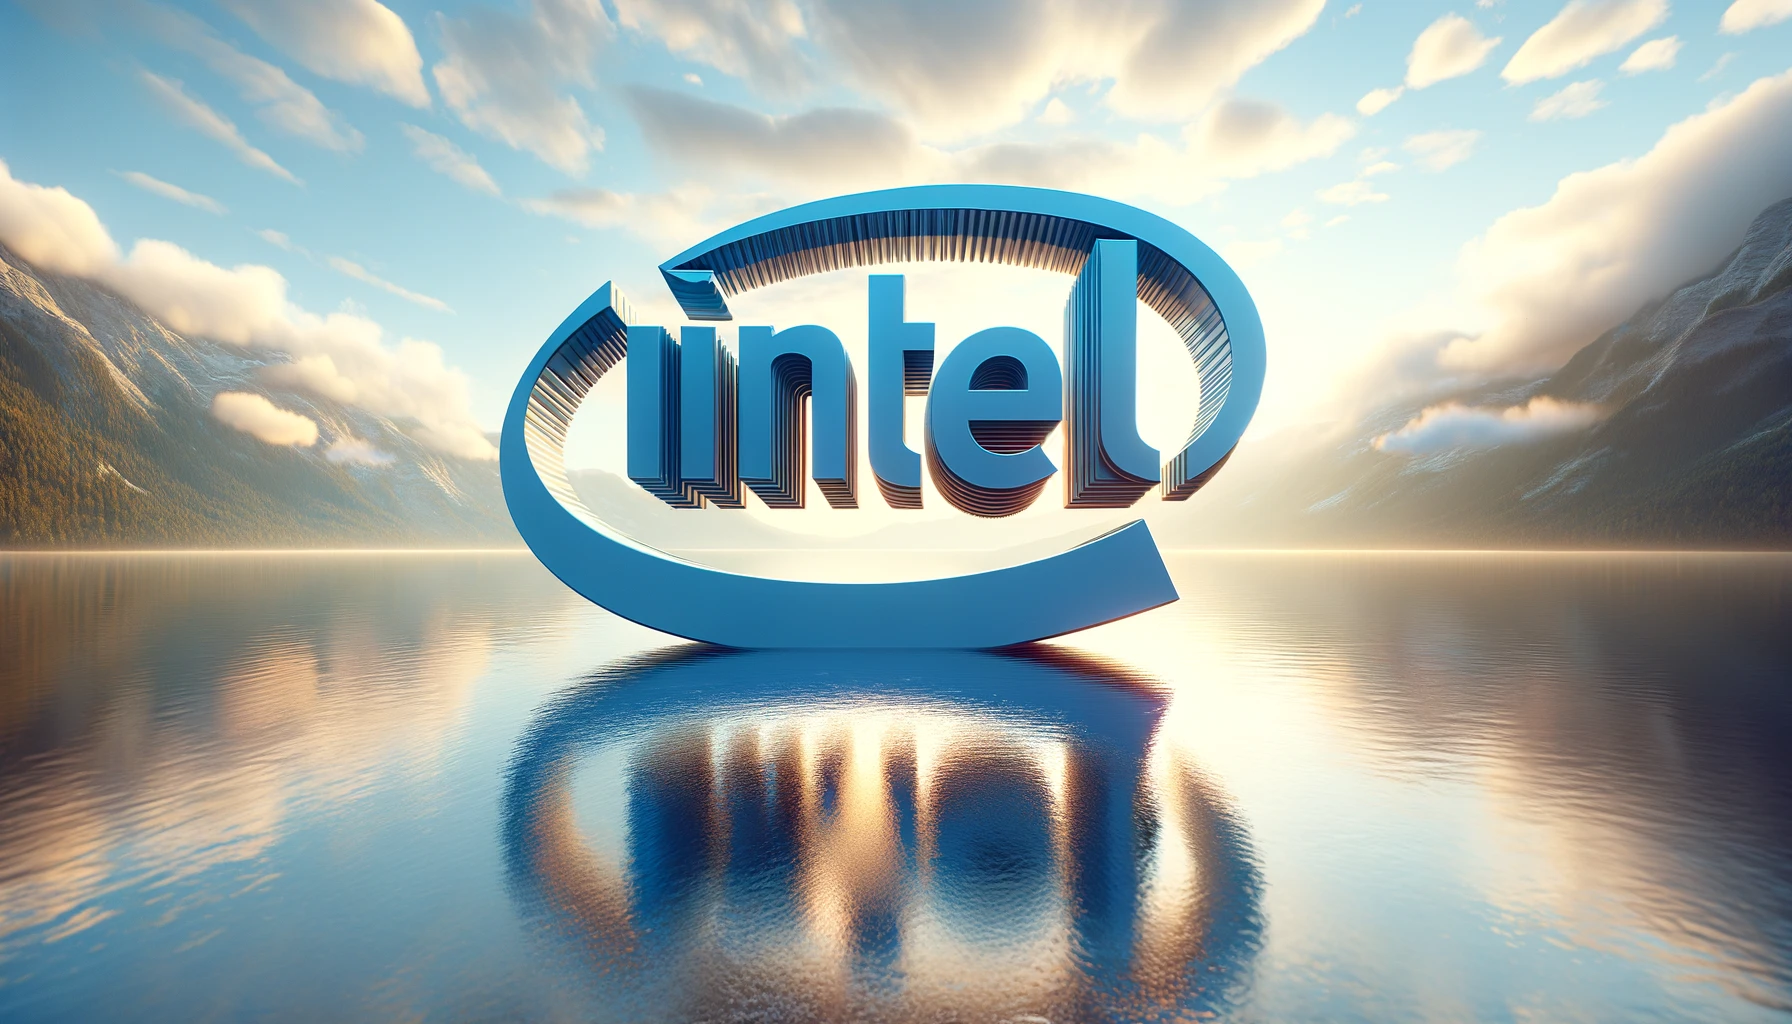 Arrow Lake-PS kommt: Intel enthüllt neuen Sockel LGA 1851